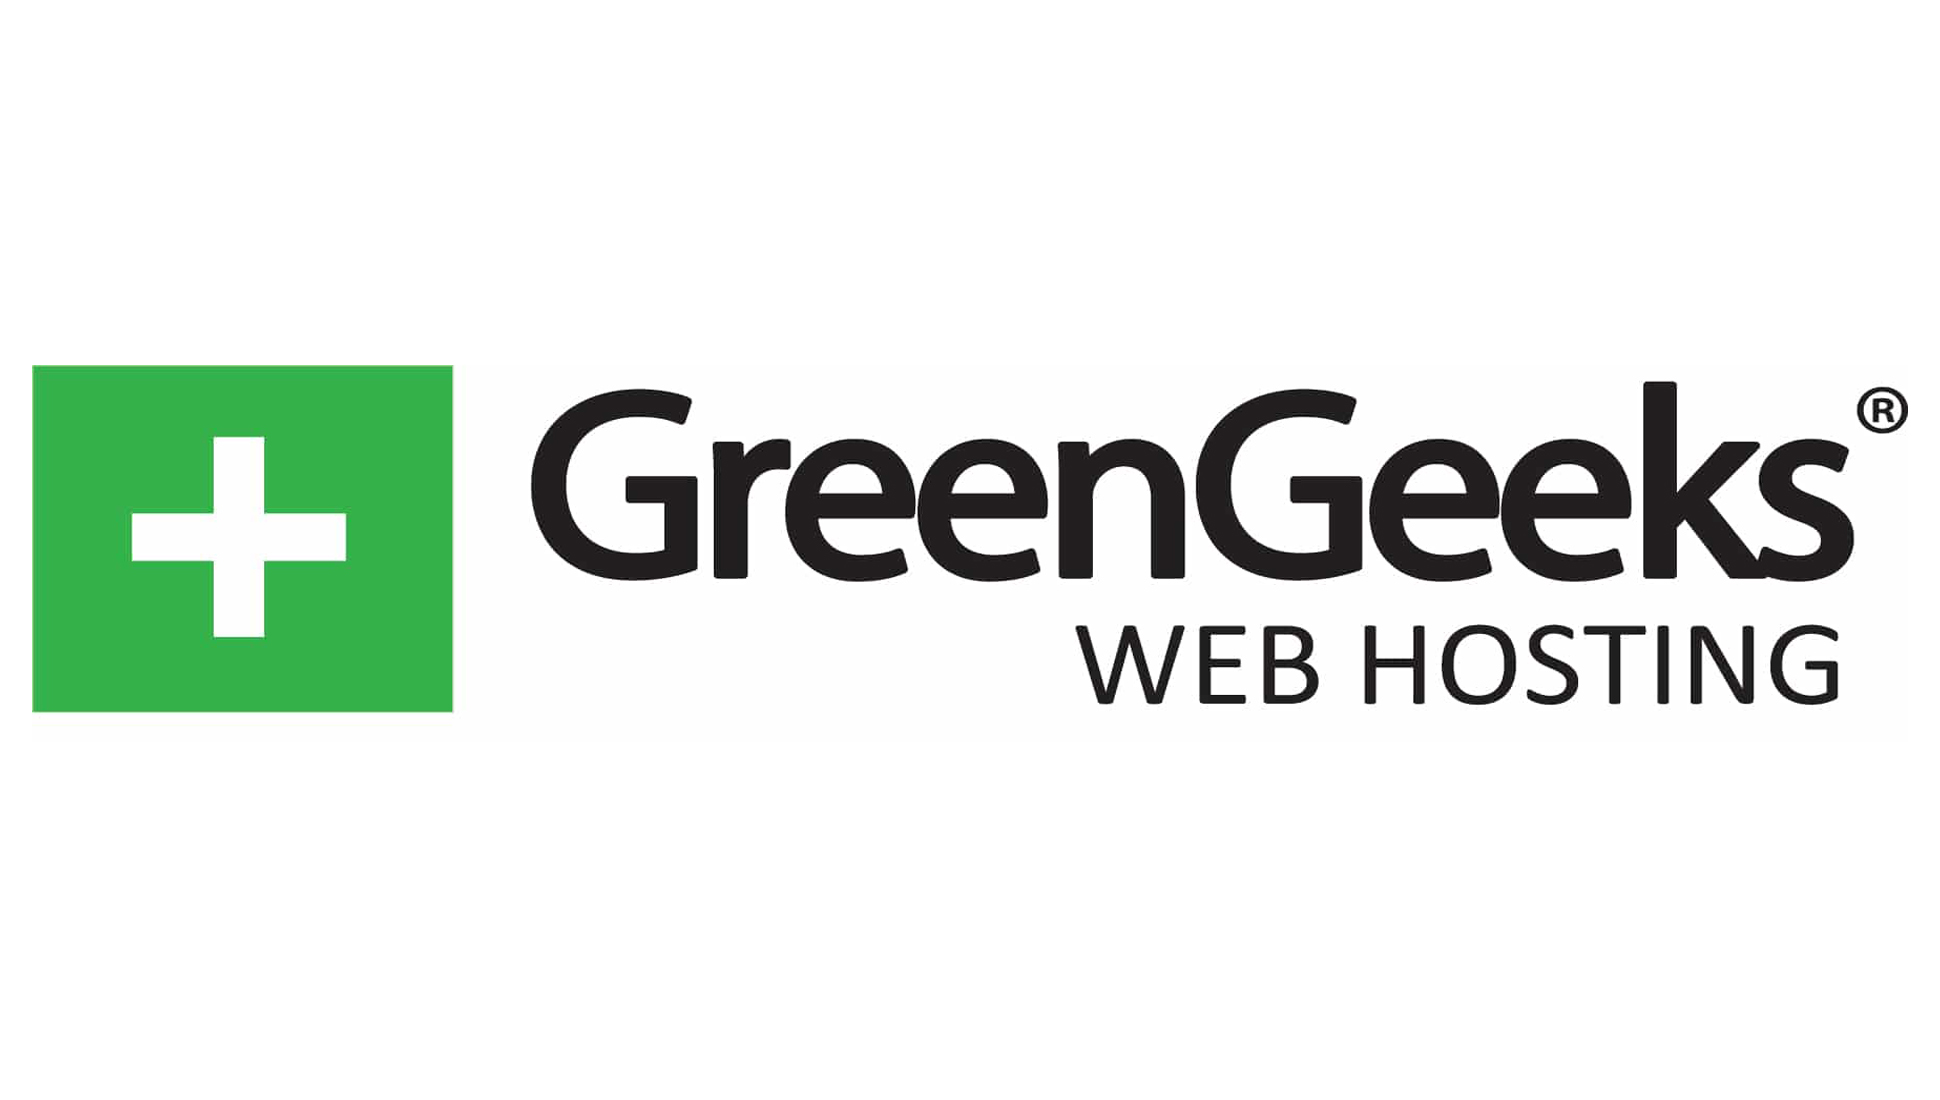 GreenGeeks web hosting review | Tom's Guide